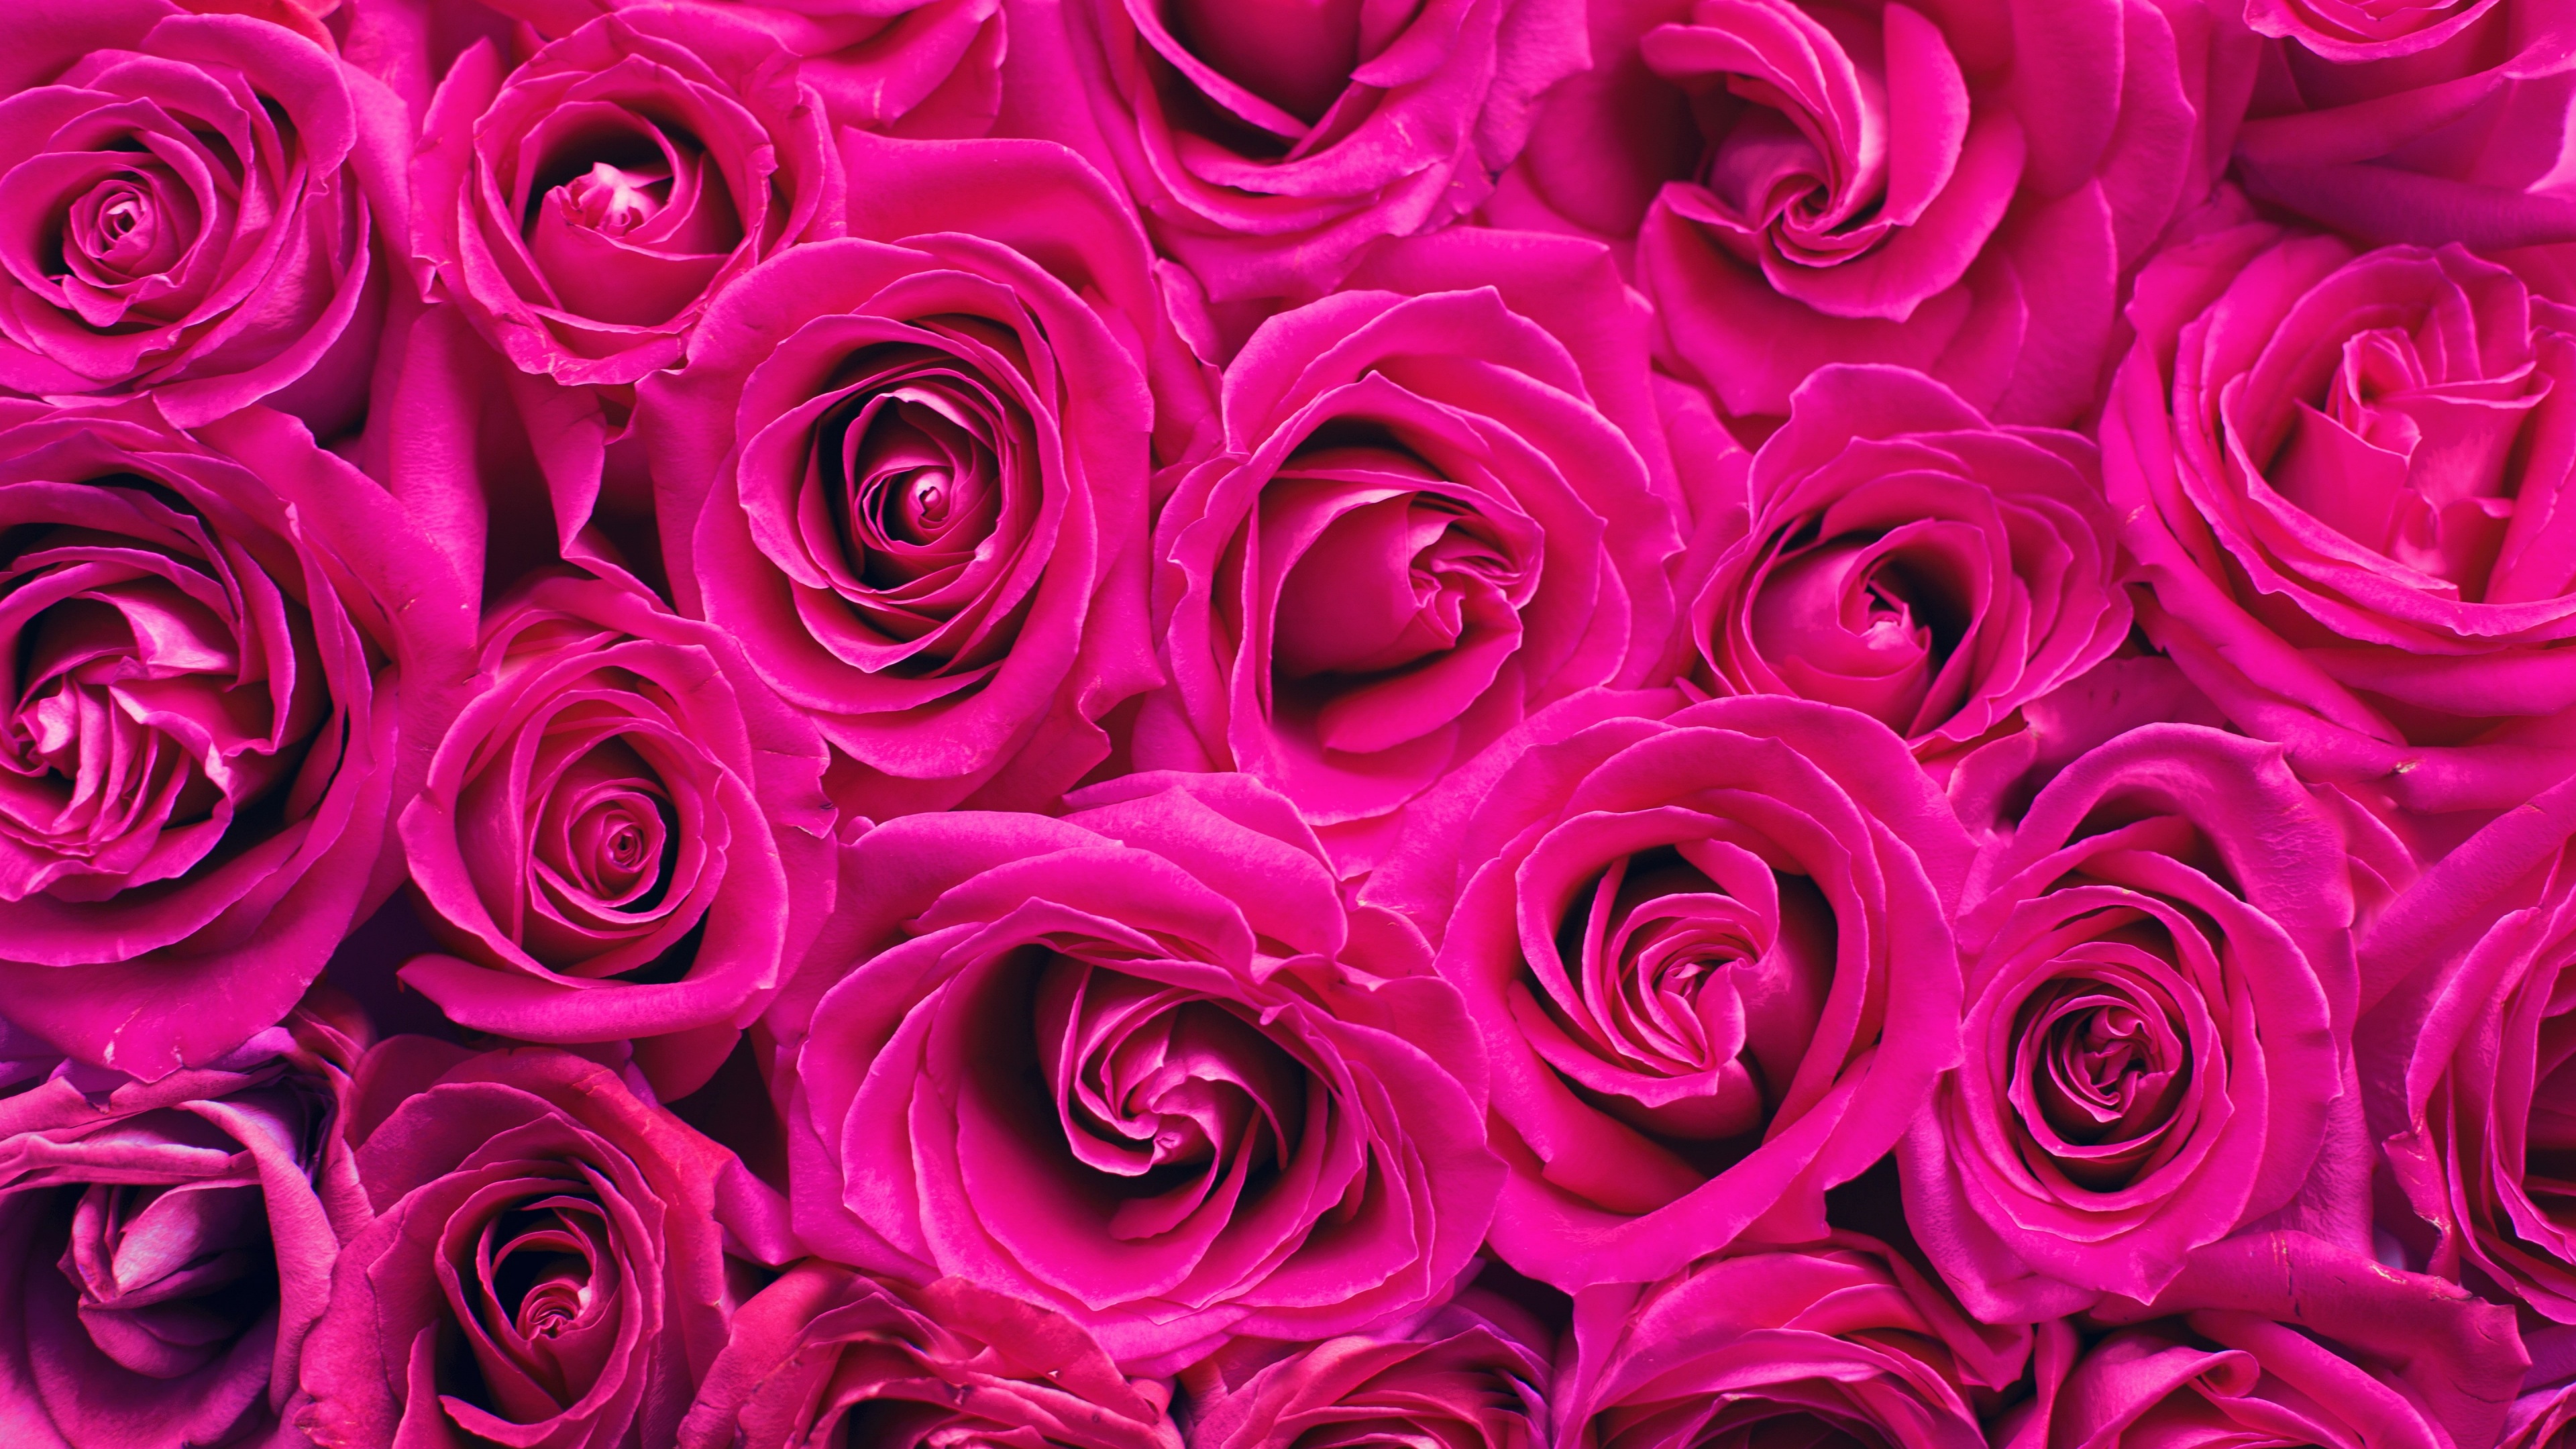 Free download Download wallpaper 3840x2400 rose flower bud surface 4k ultra  [3840x2400] for your Desktop, Mobile & Tablet | Explore 24+ Roses Flower 4K  Wallpapers | Roses Wallpapers, Yellow Roses Wallpapers, Roses Wallpaper